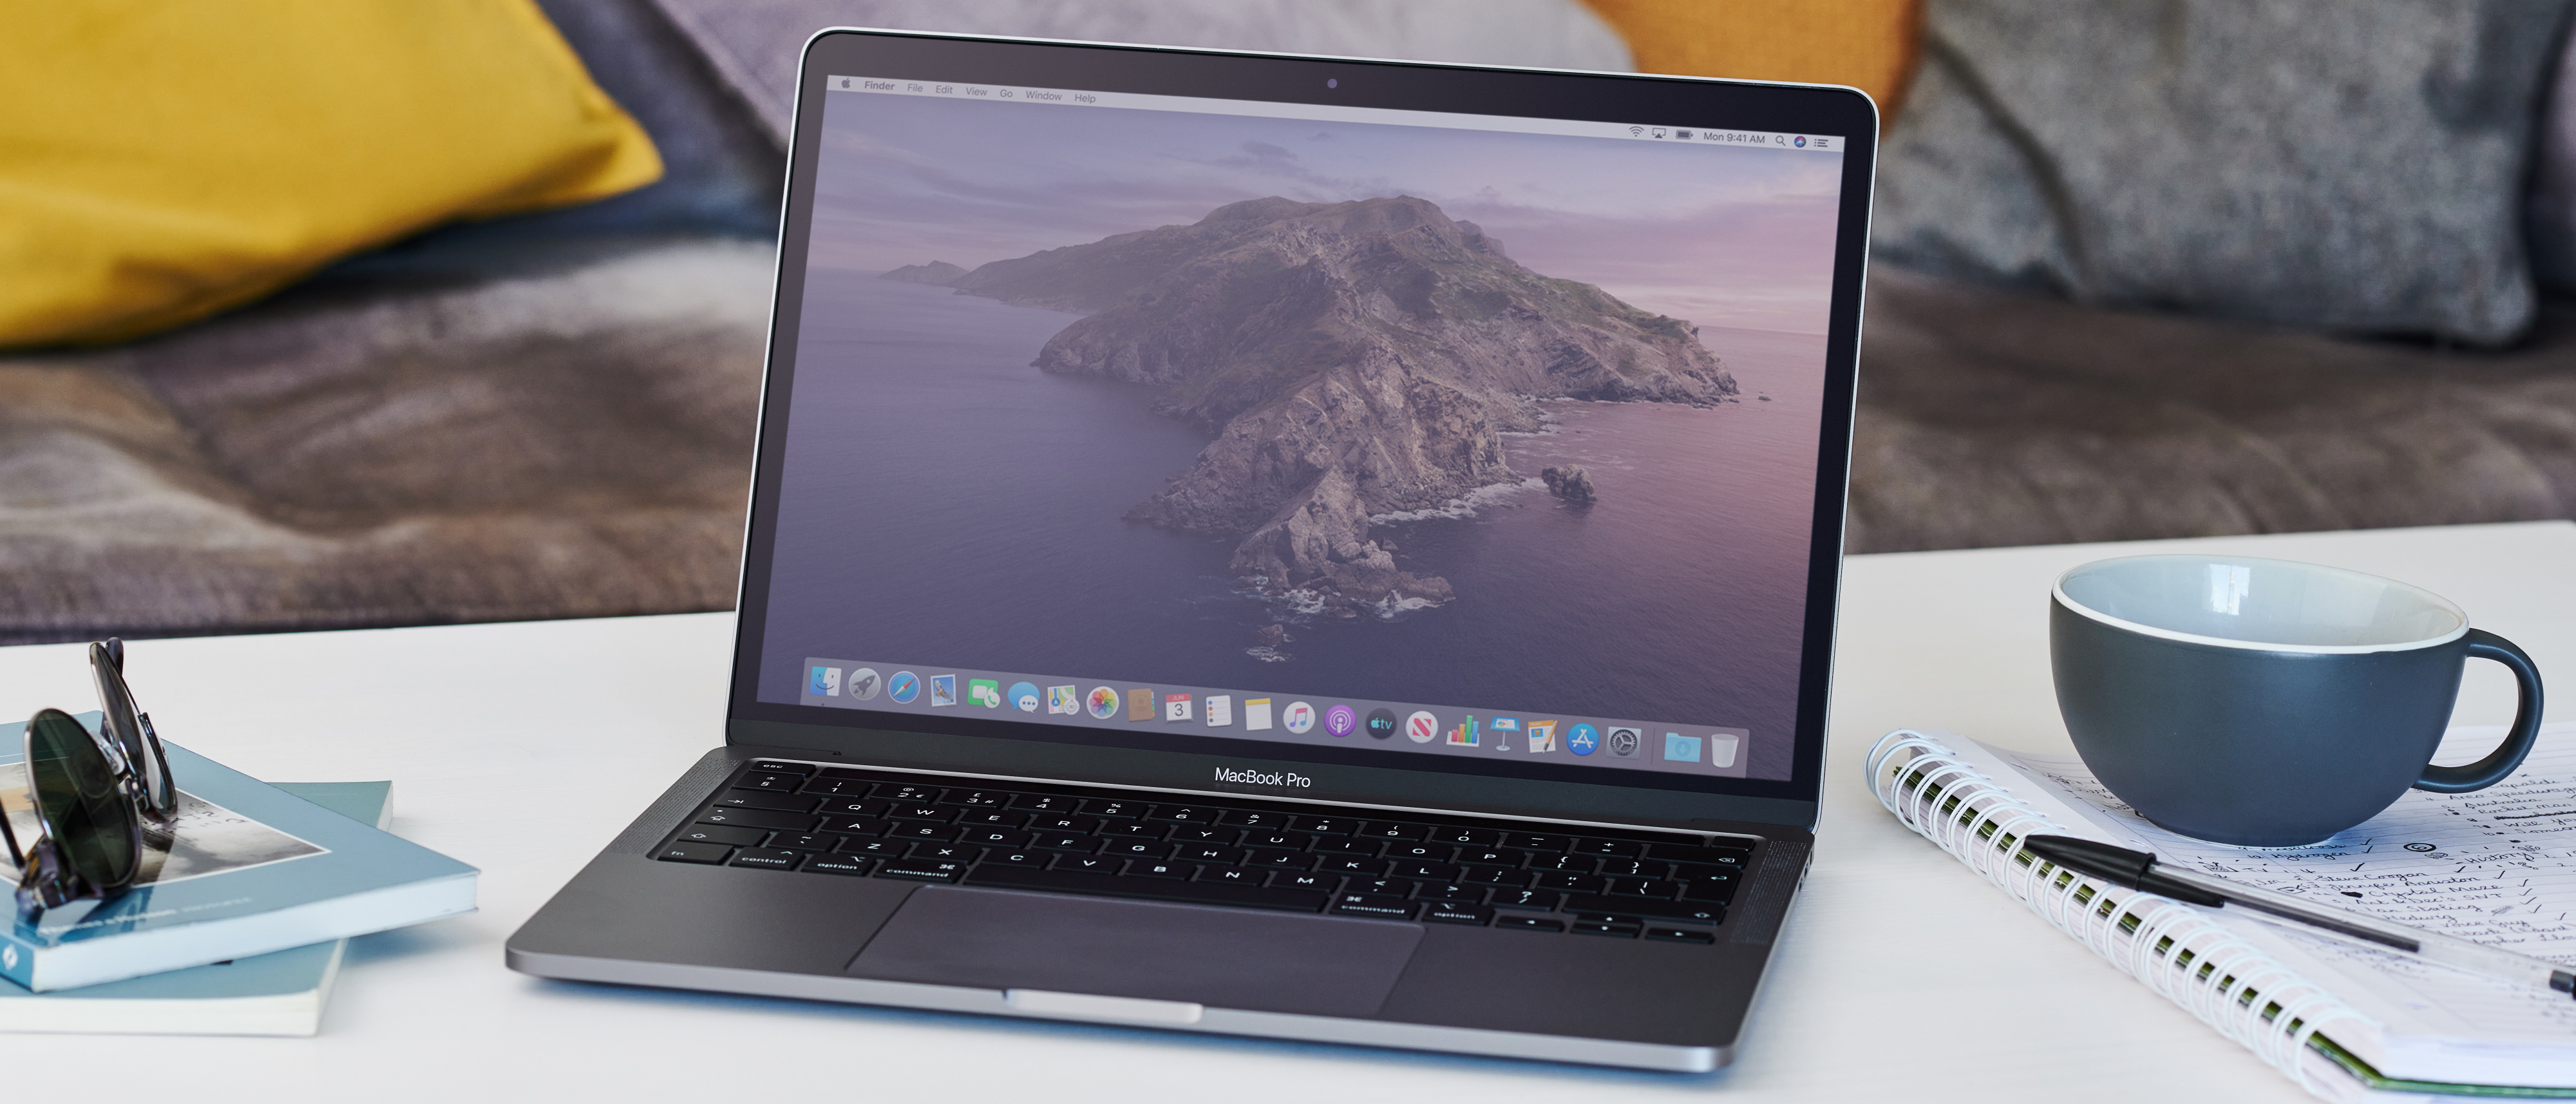 Apple MacBook Pro (13-inch, 2020) review | TechRadar